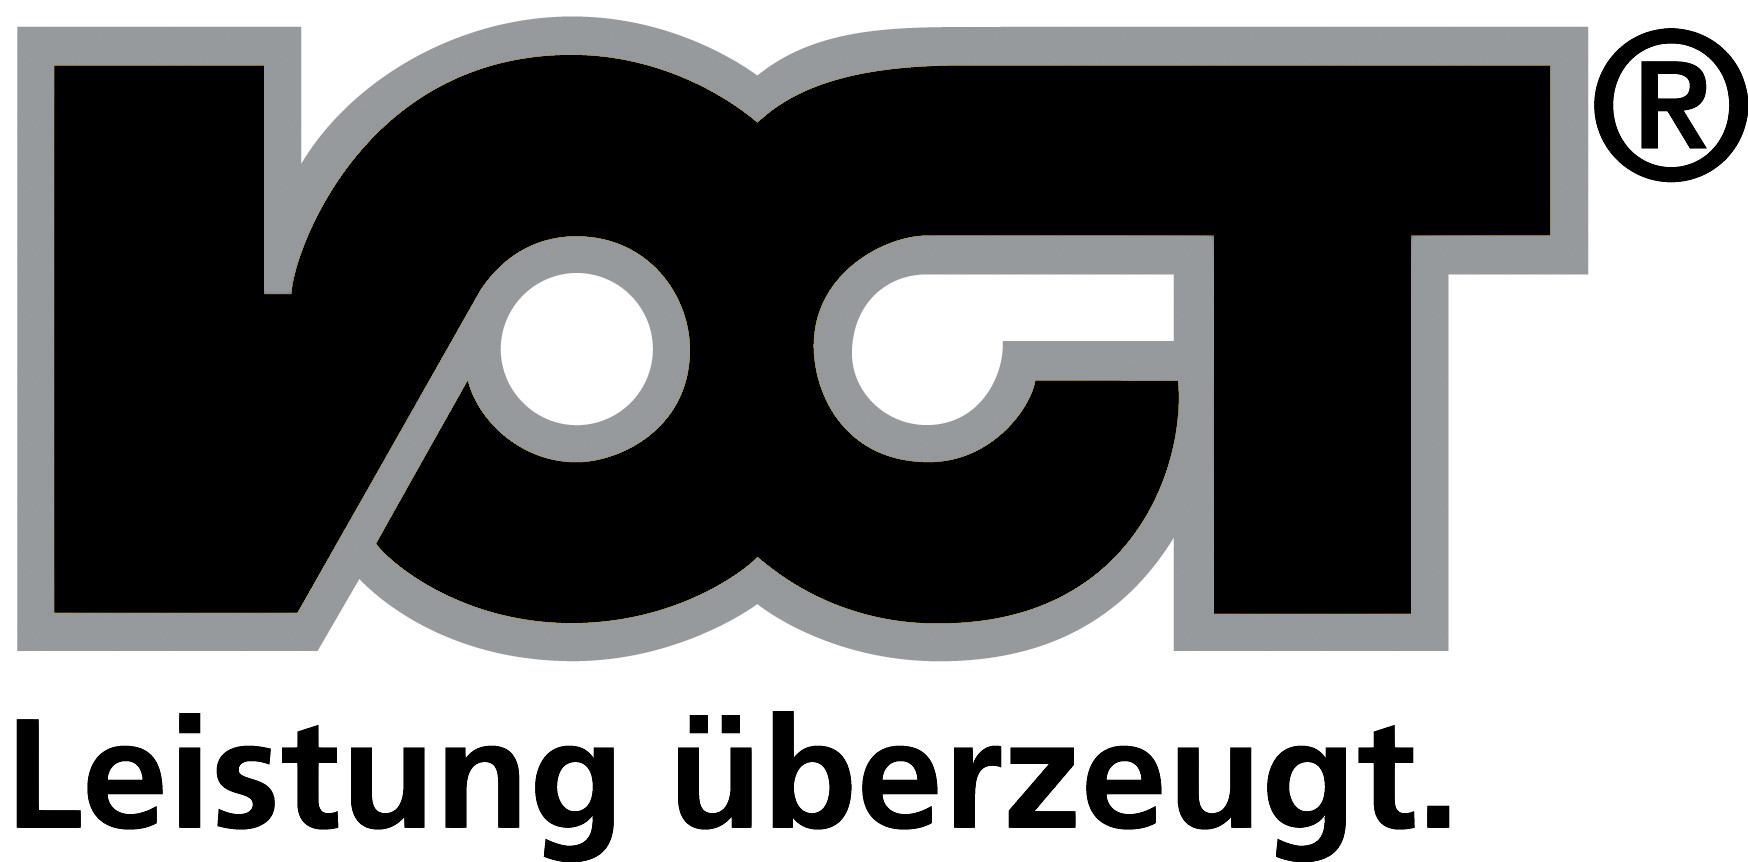 foerde-kuechen-partner-vogt-logo1.jpg